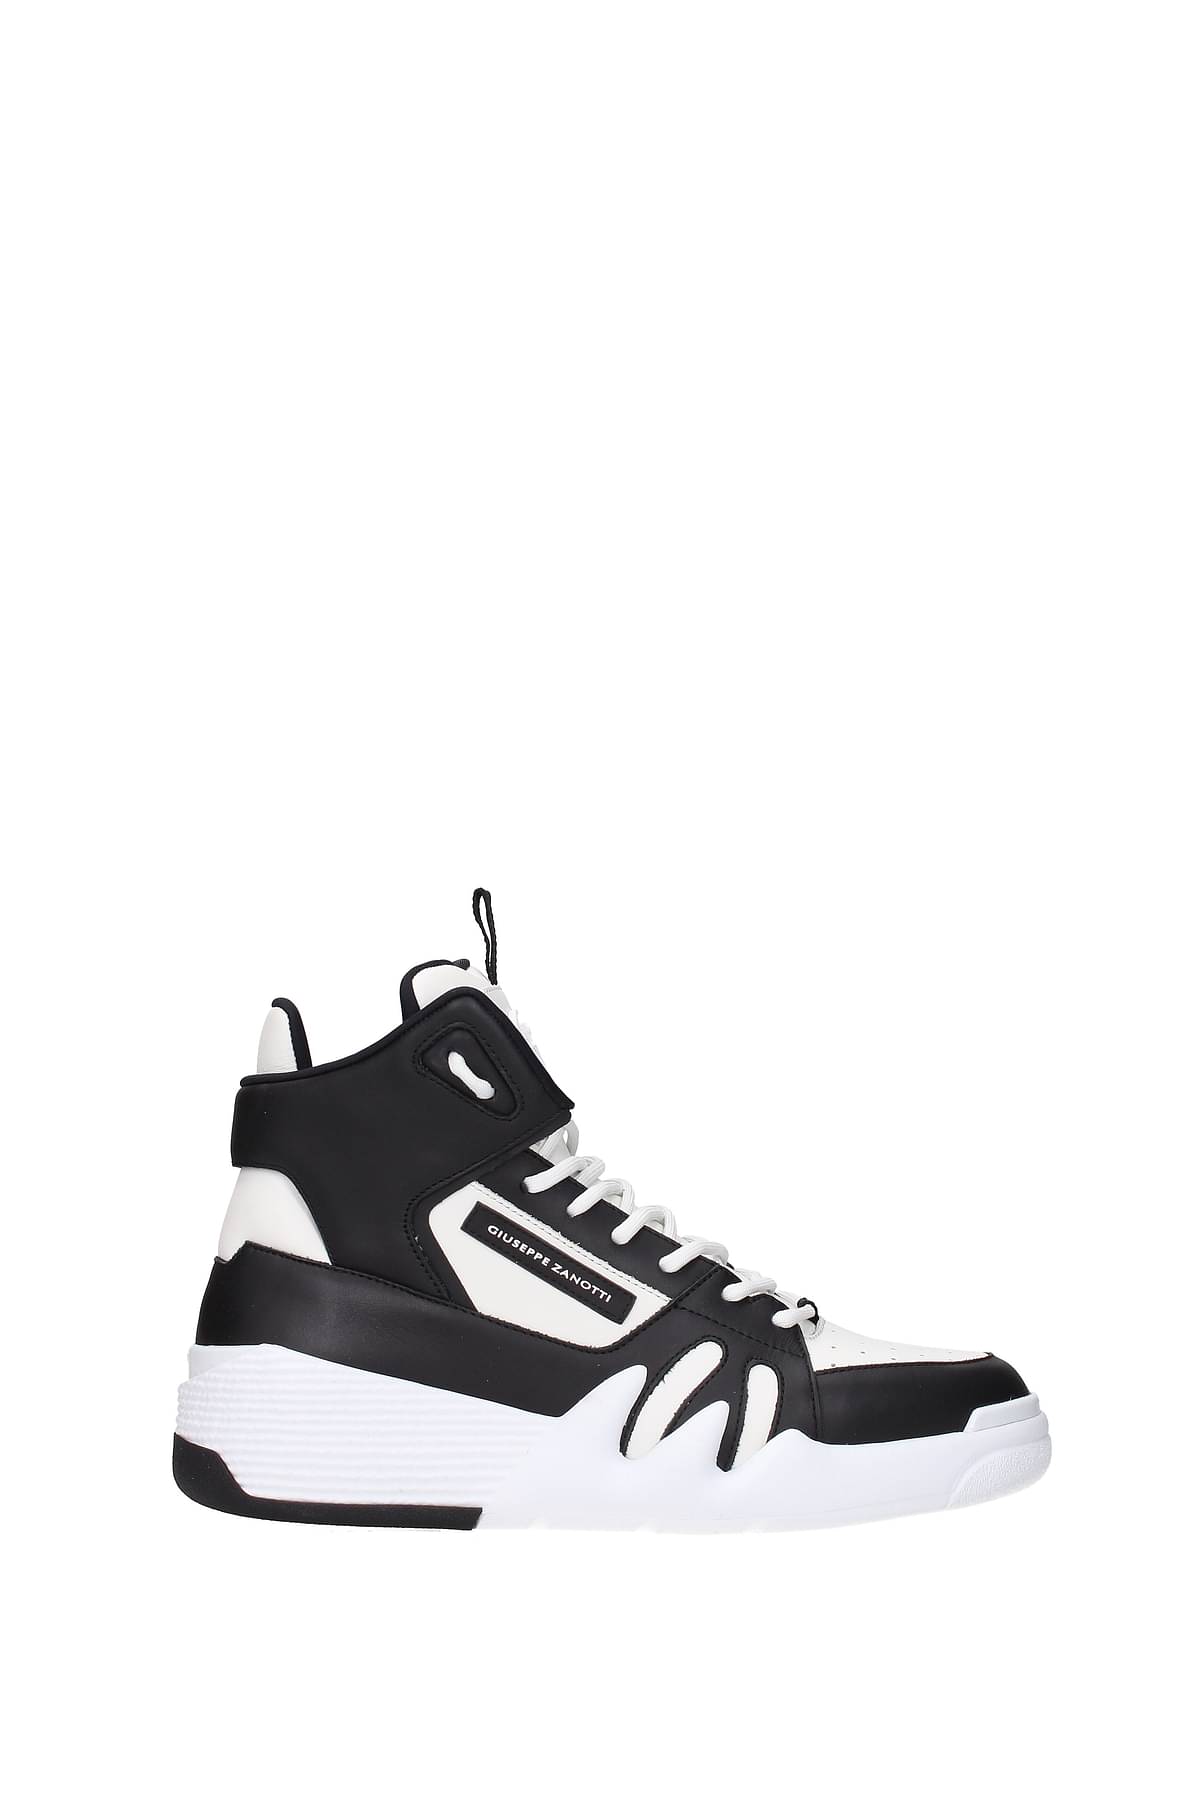 Giuseppe Zanotti Sneakers Men Leather Black White 393,75€